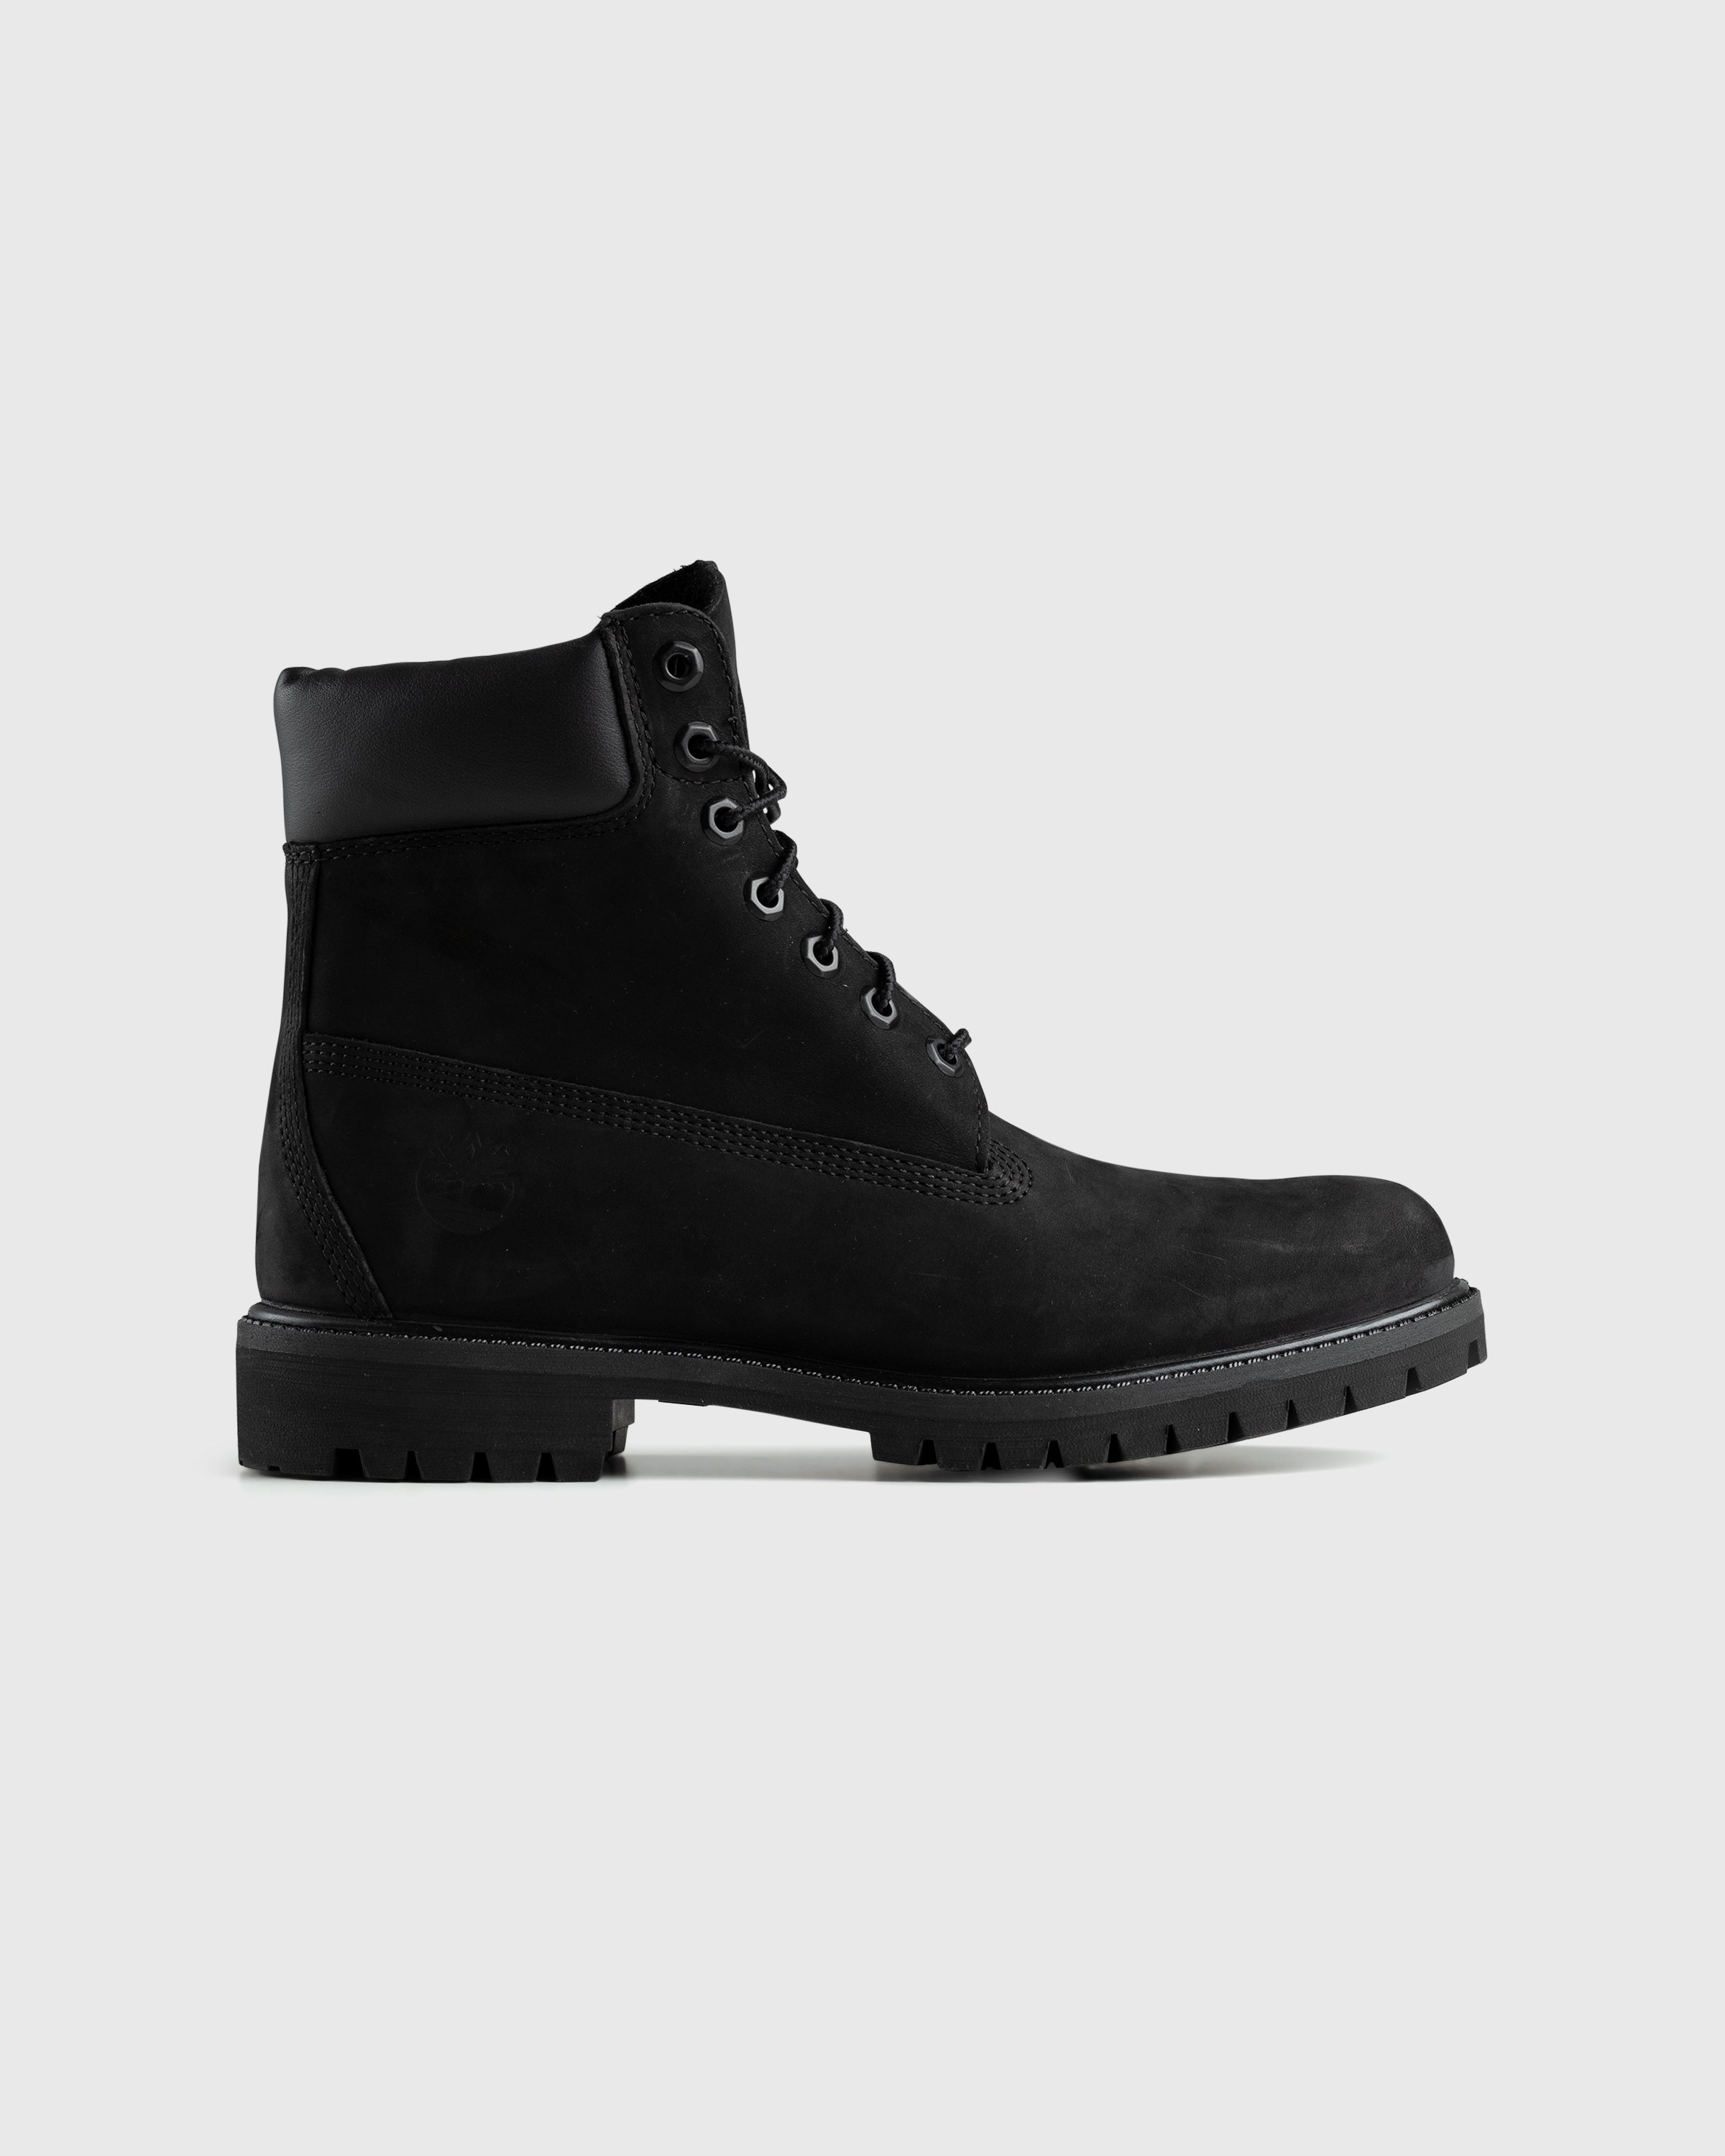 Timberland - 6 Inch Premium Boot Black - Footwear - Black - Image 1